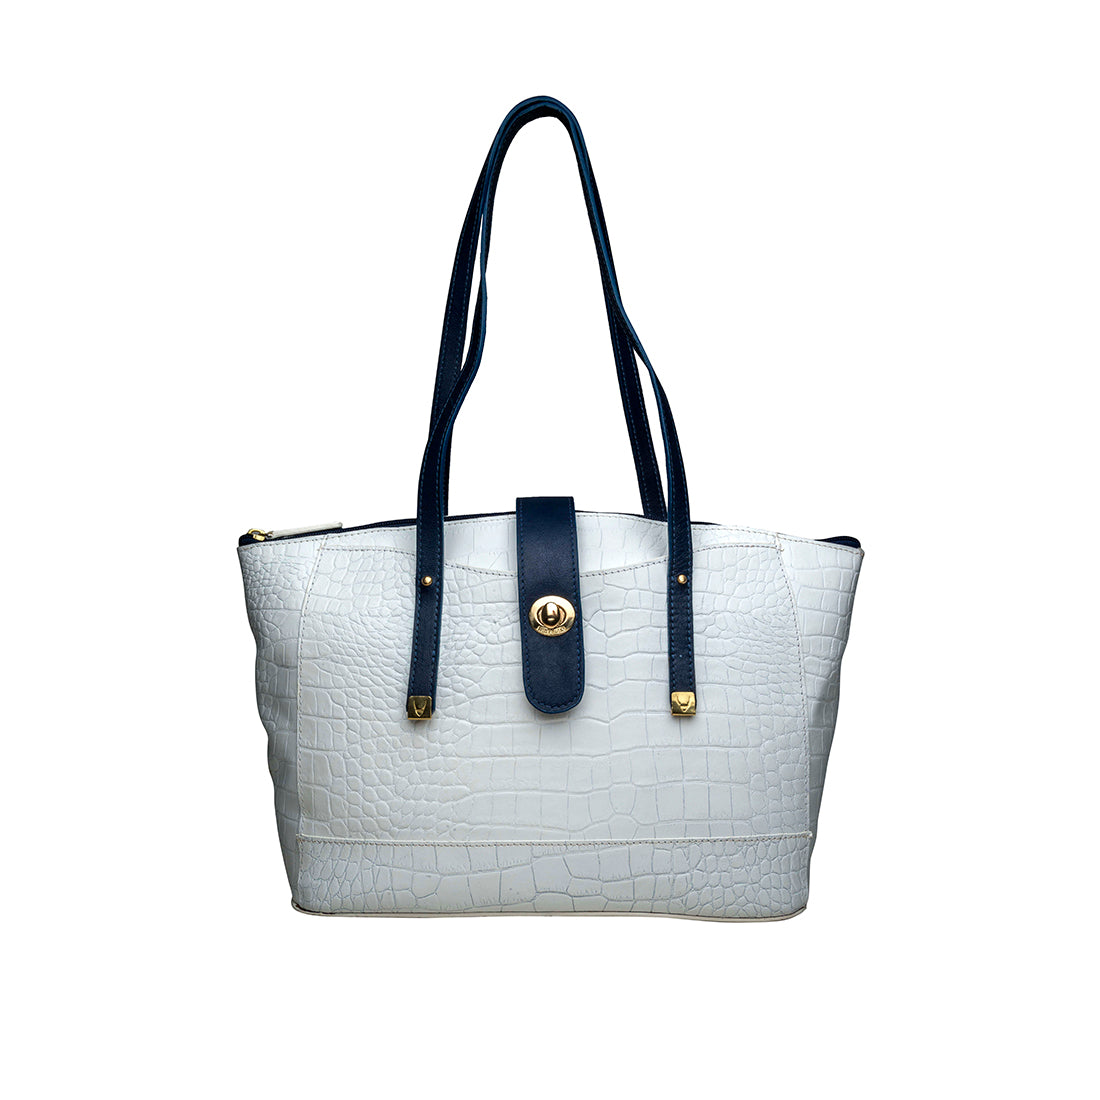 Buy Blue Jaxon Tote Bag Online - Hidesign